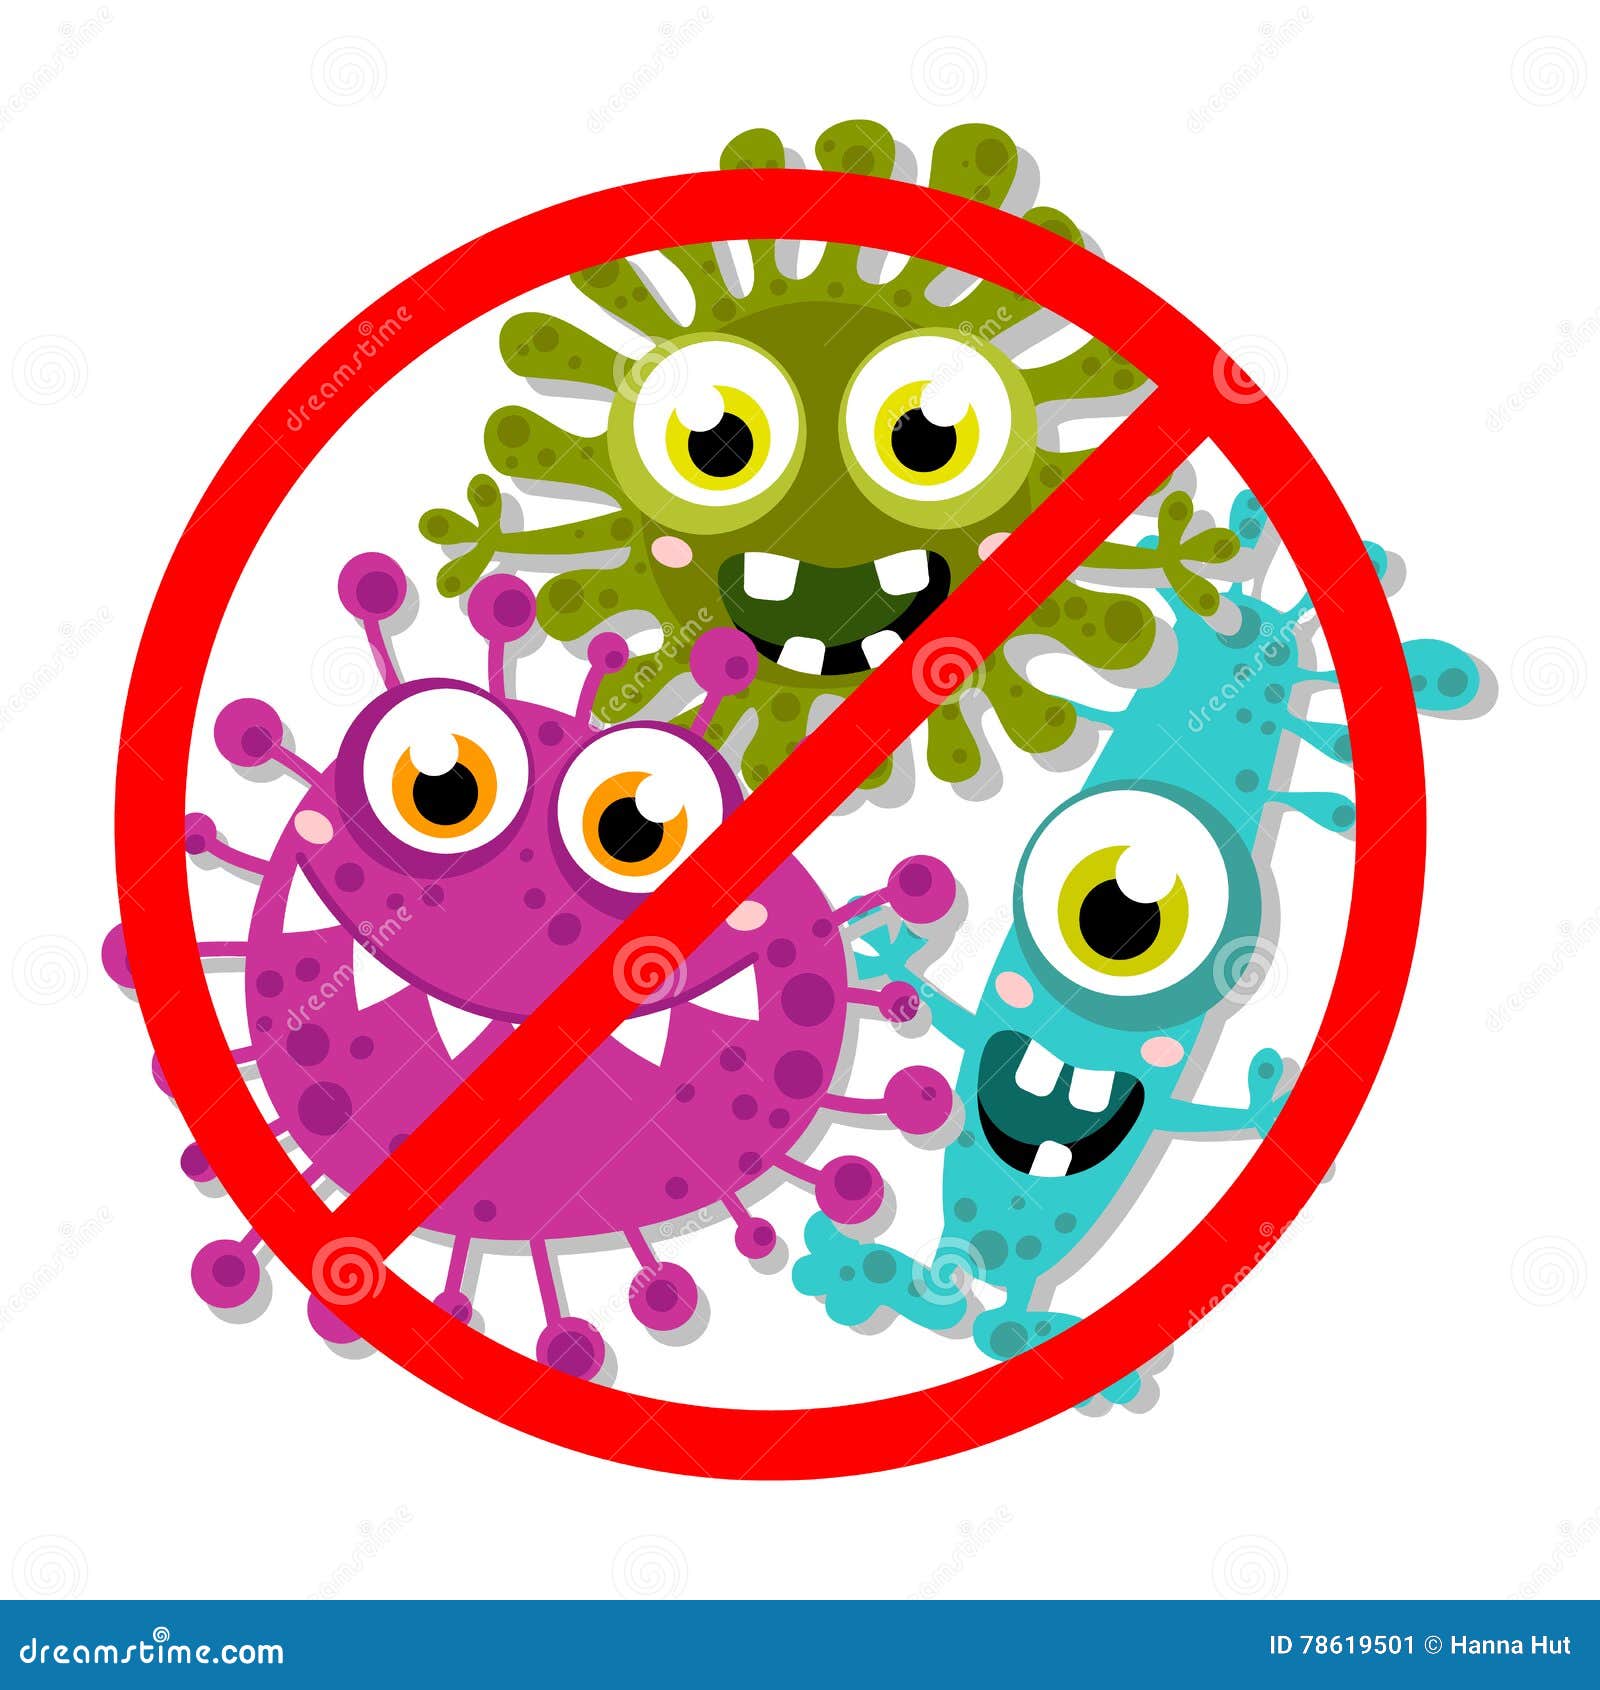  Germ  Bacteria Virus Microbe Pathogen Characters Stock 